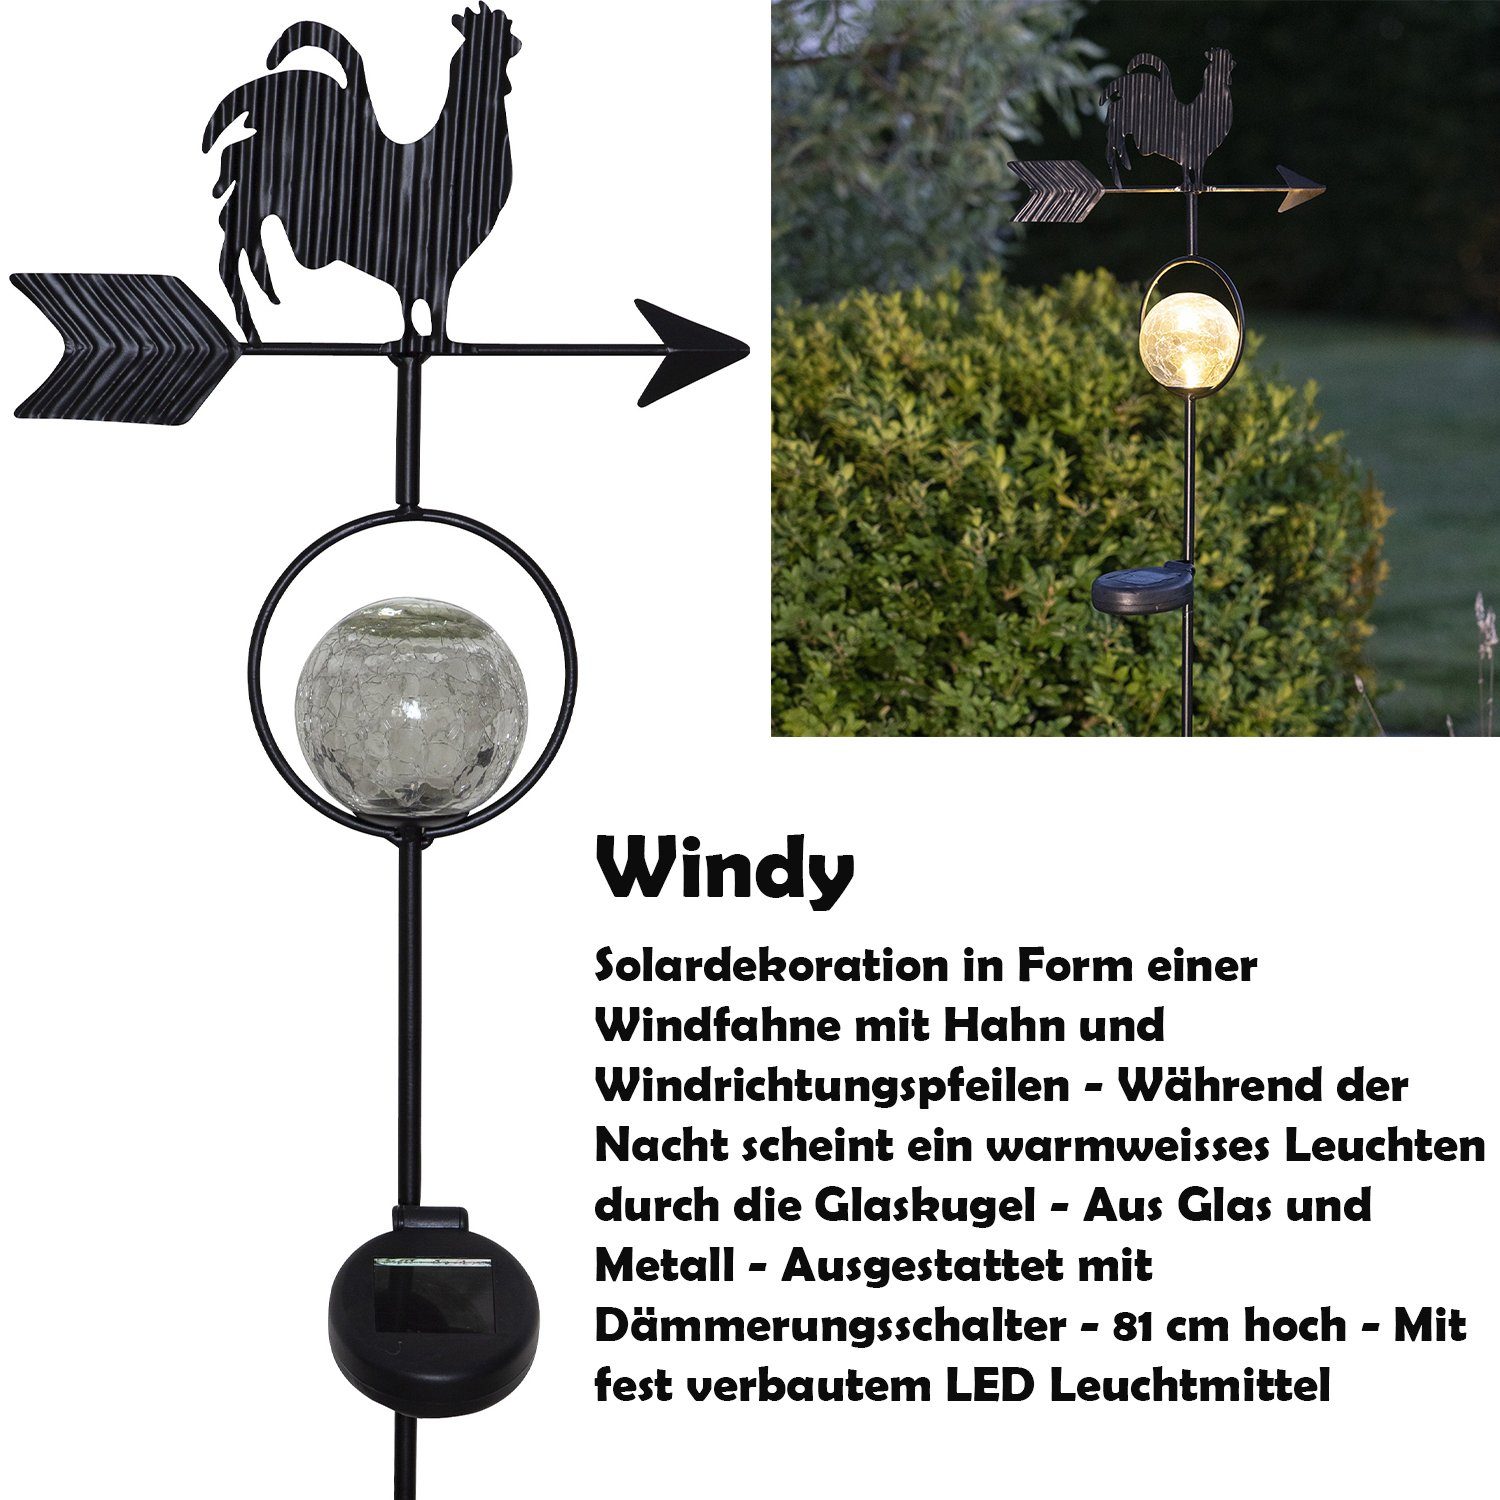 x LED Warmweiß "Windy" H integriert, Solarleuchte 25cm 9cm SOLAR TRADING fest Dekoration Wetterfahne B x Ø LED STAR schwarz, 81cm,